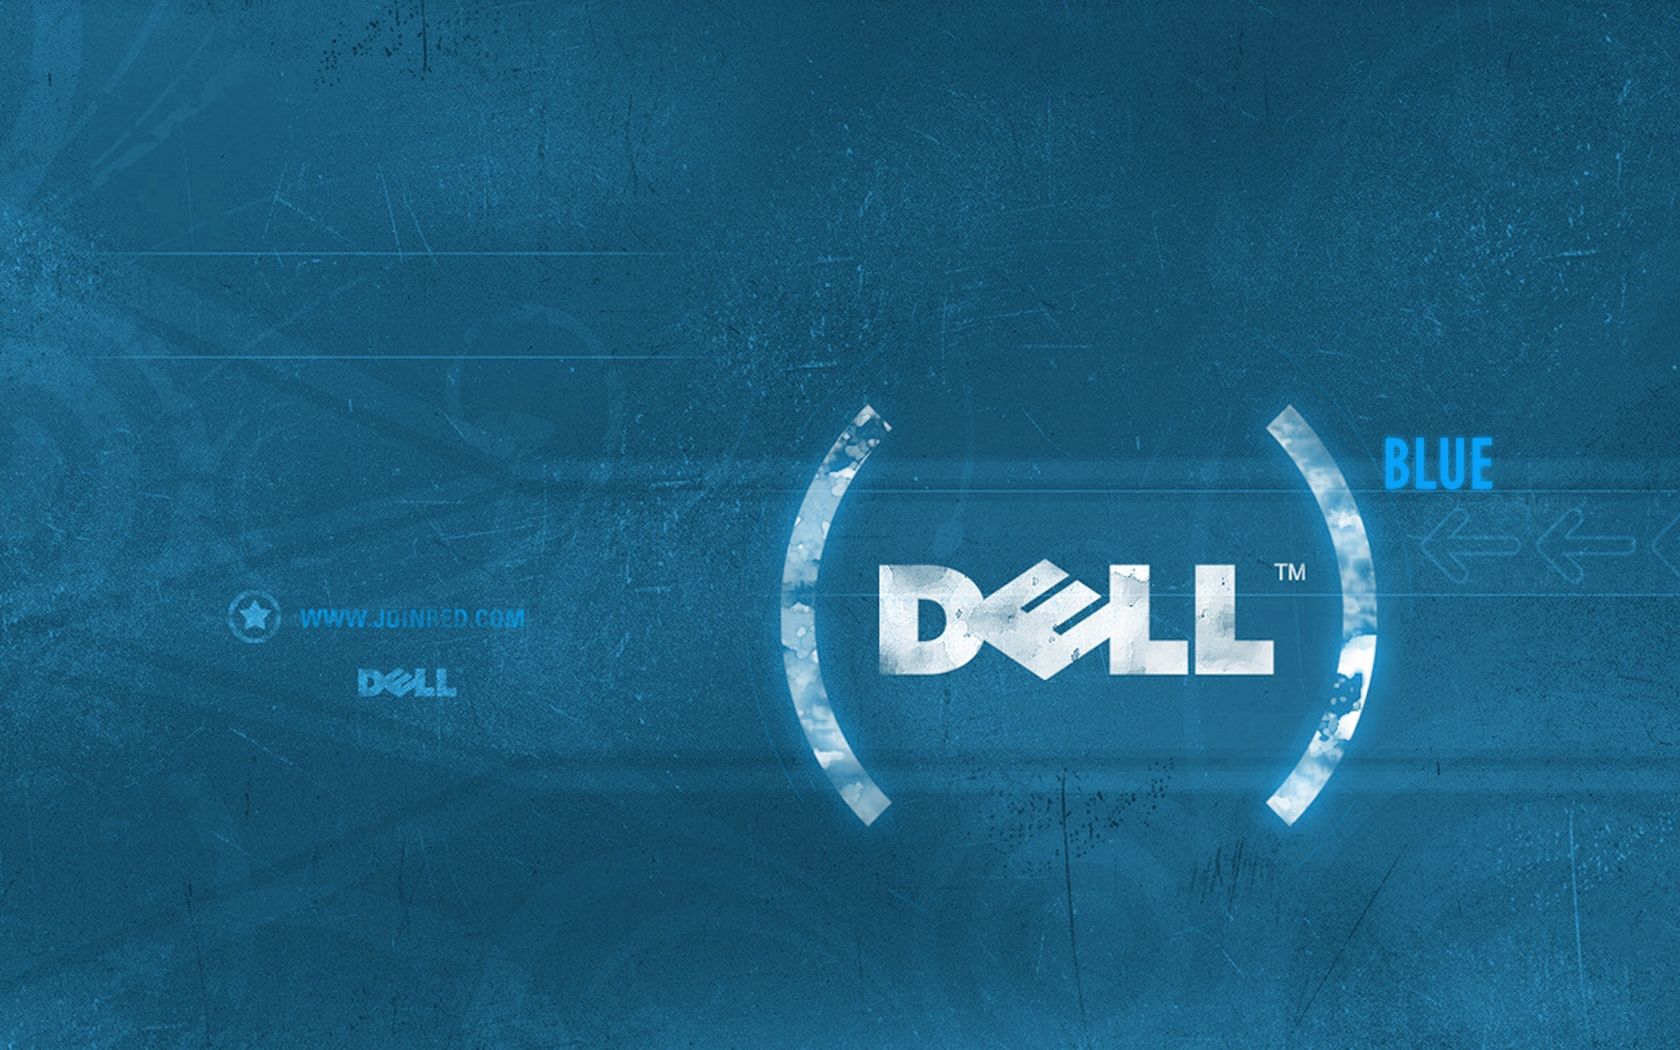 Dell Background Blue - wallpaper.